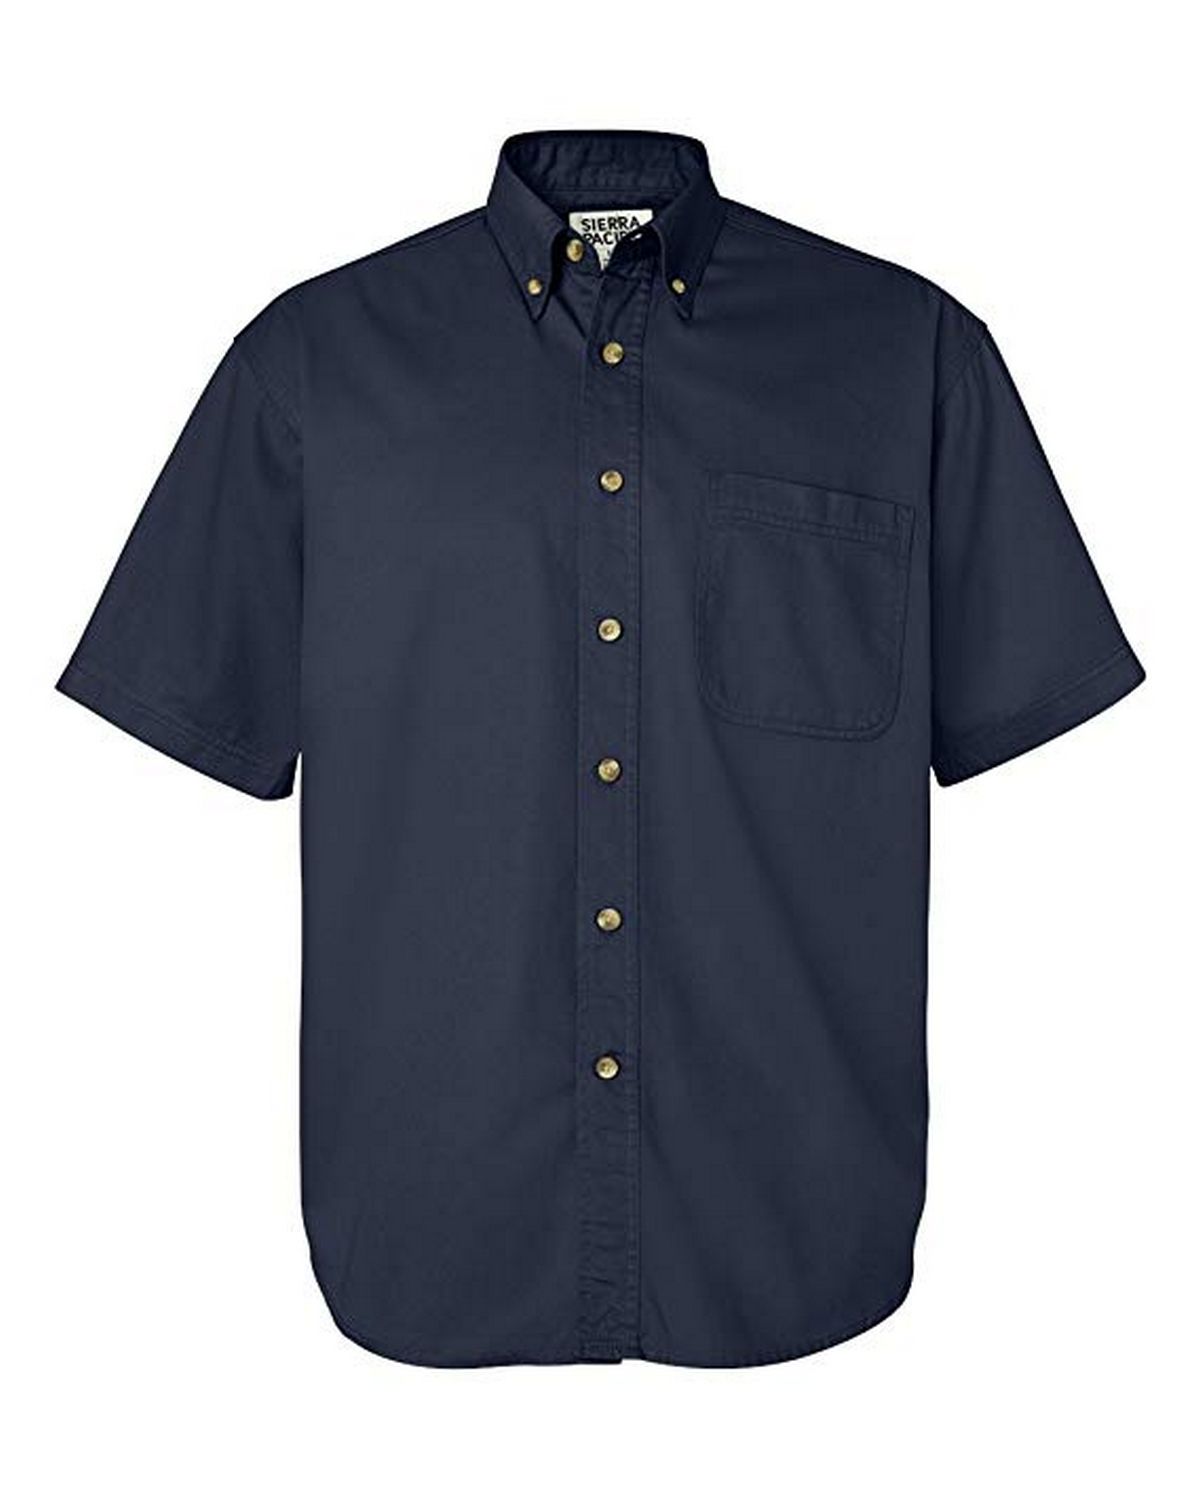 Sierra Pacific 201 Mens Short Sleeve Cotton Twill Shirt